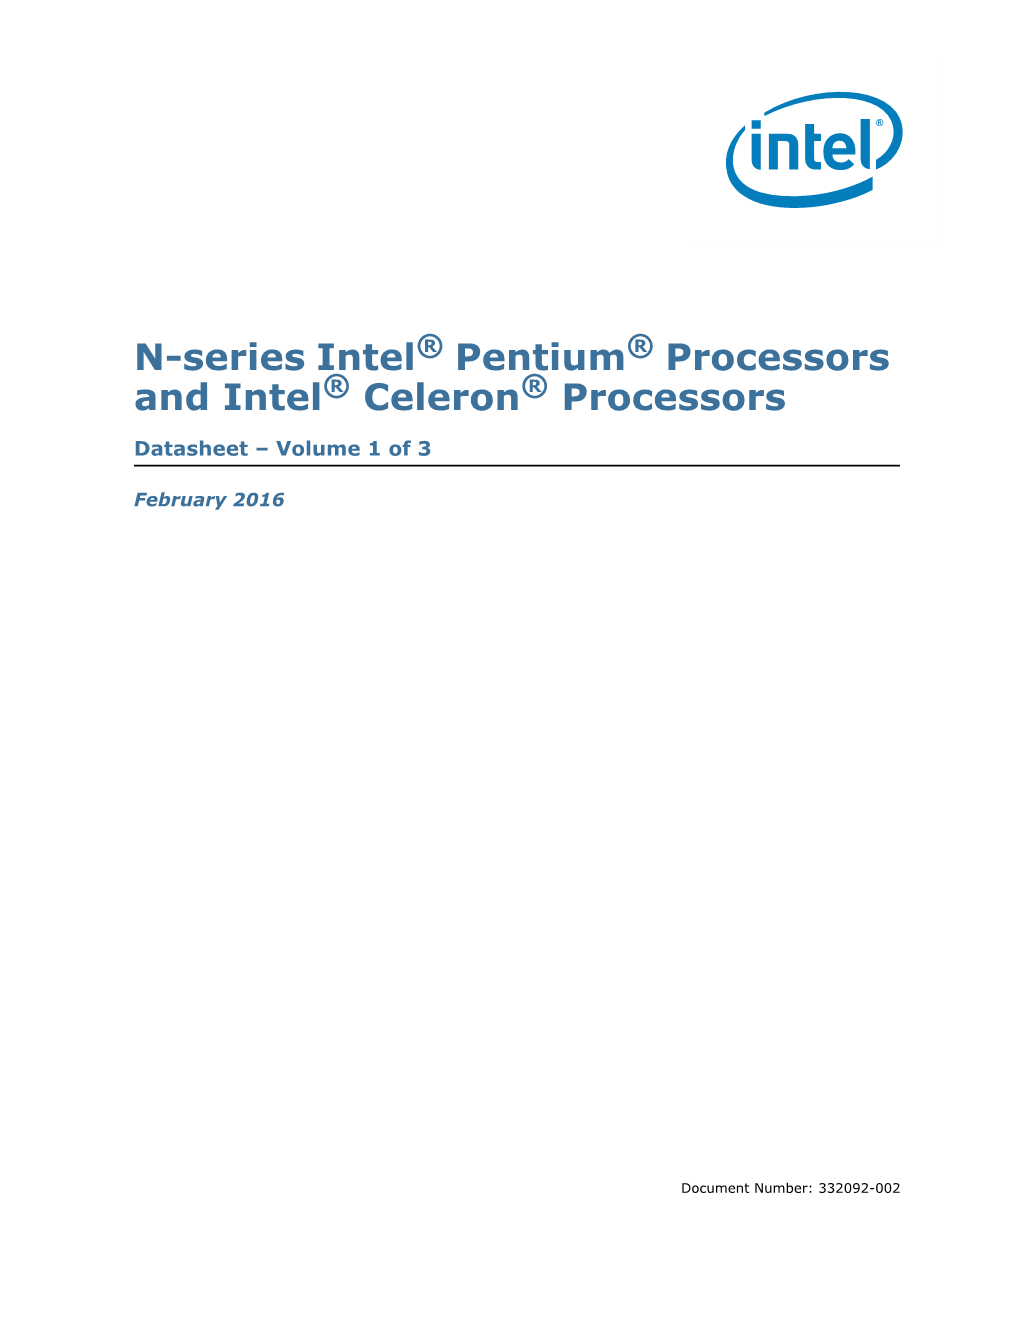 N-Series Intel® Pentium® Processors and Intel® Celeron® Processors